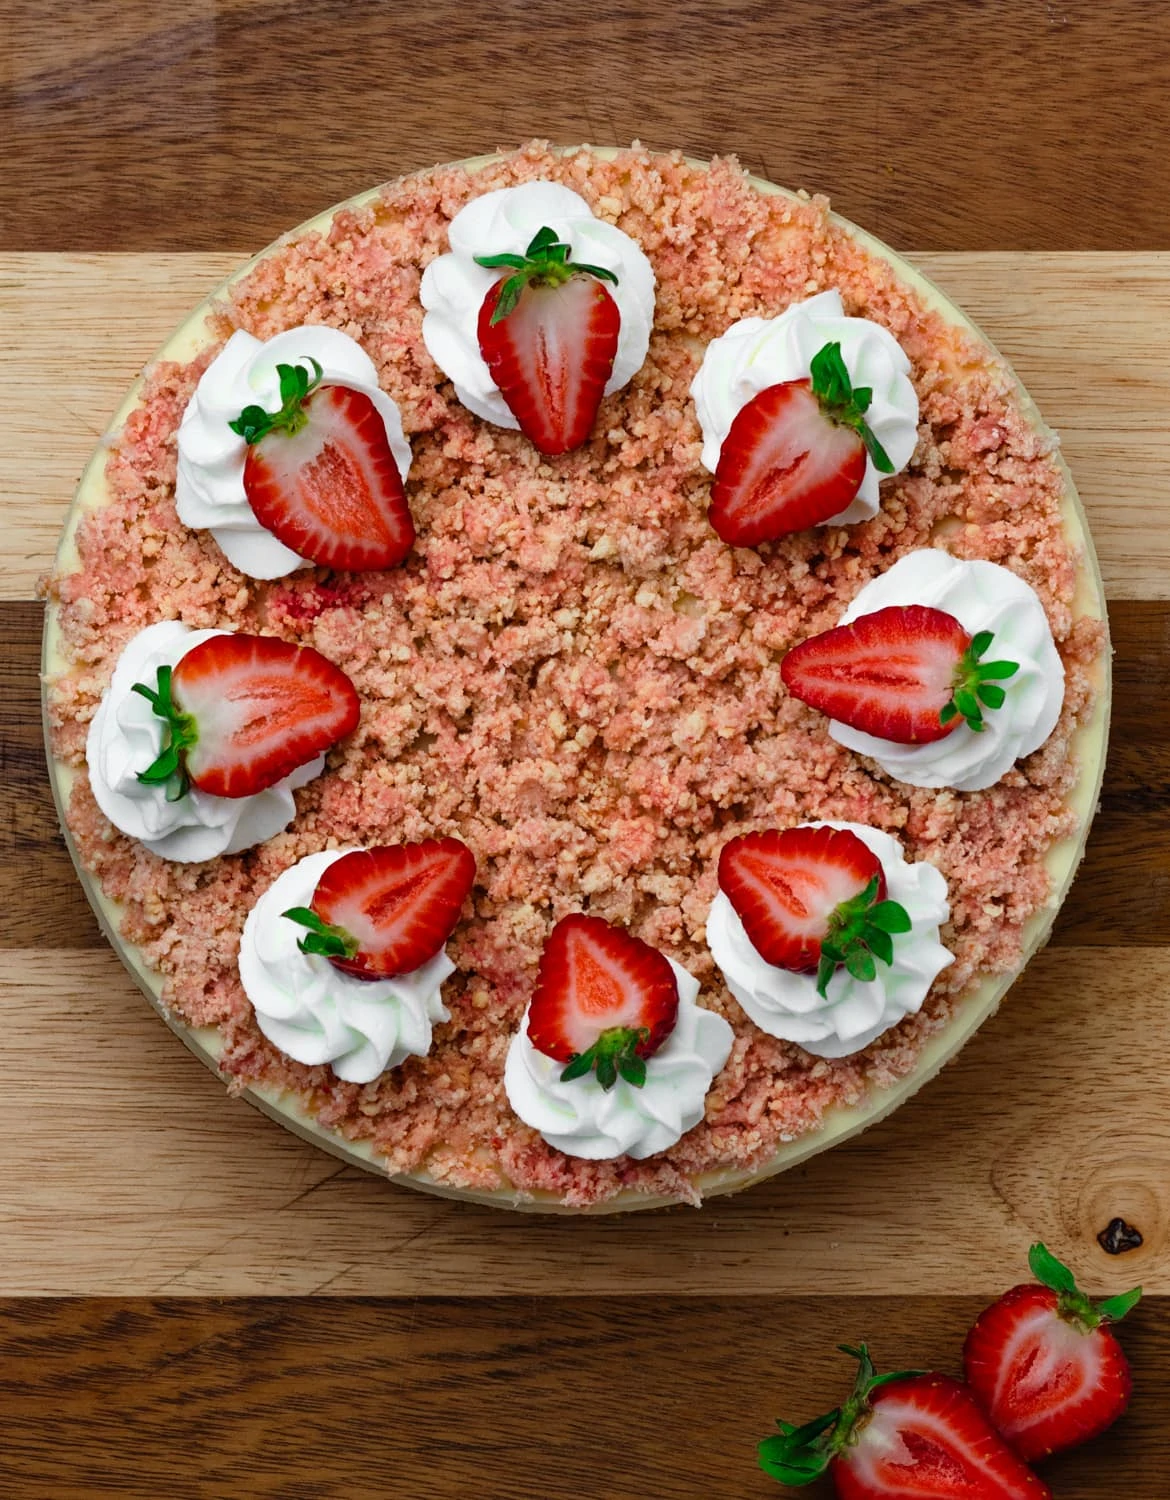 Strawberry Crunch Cheesecake